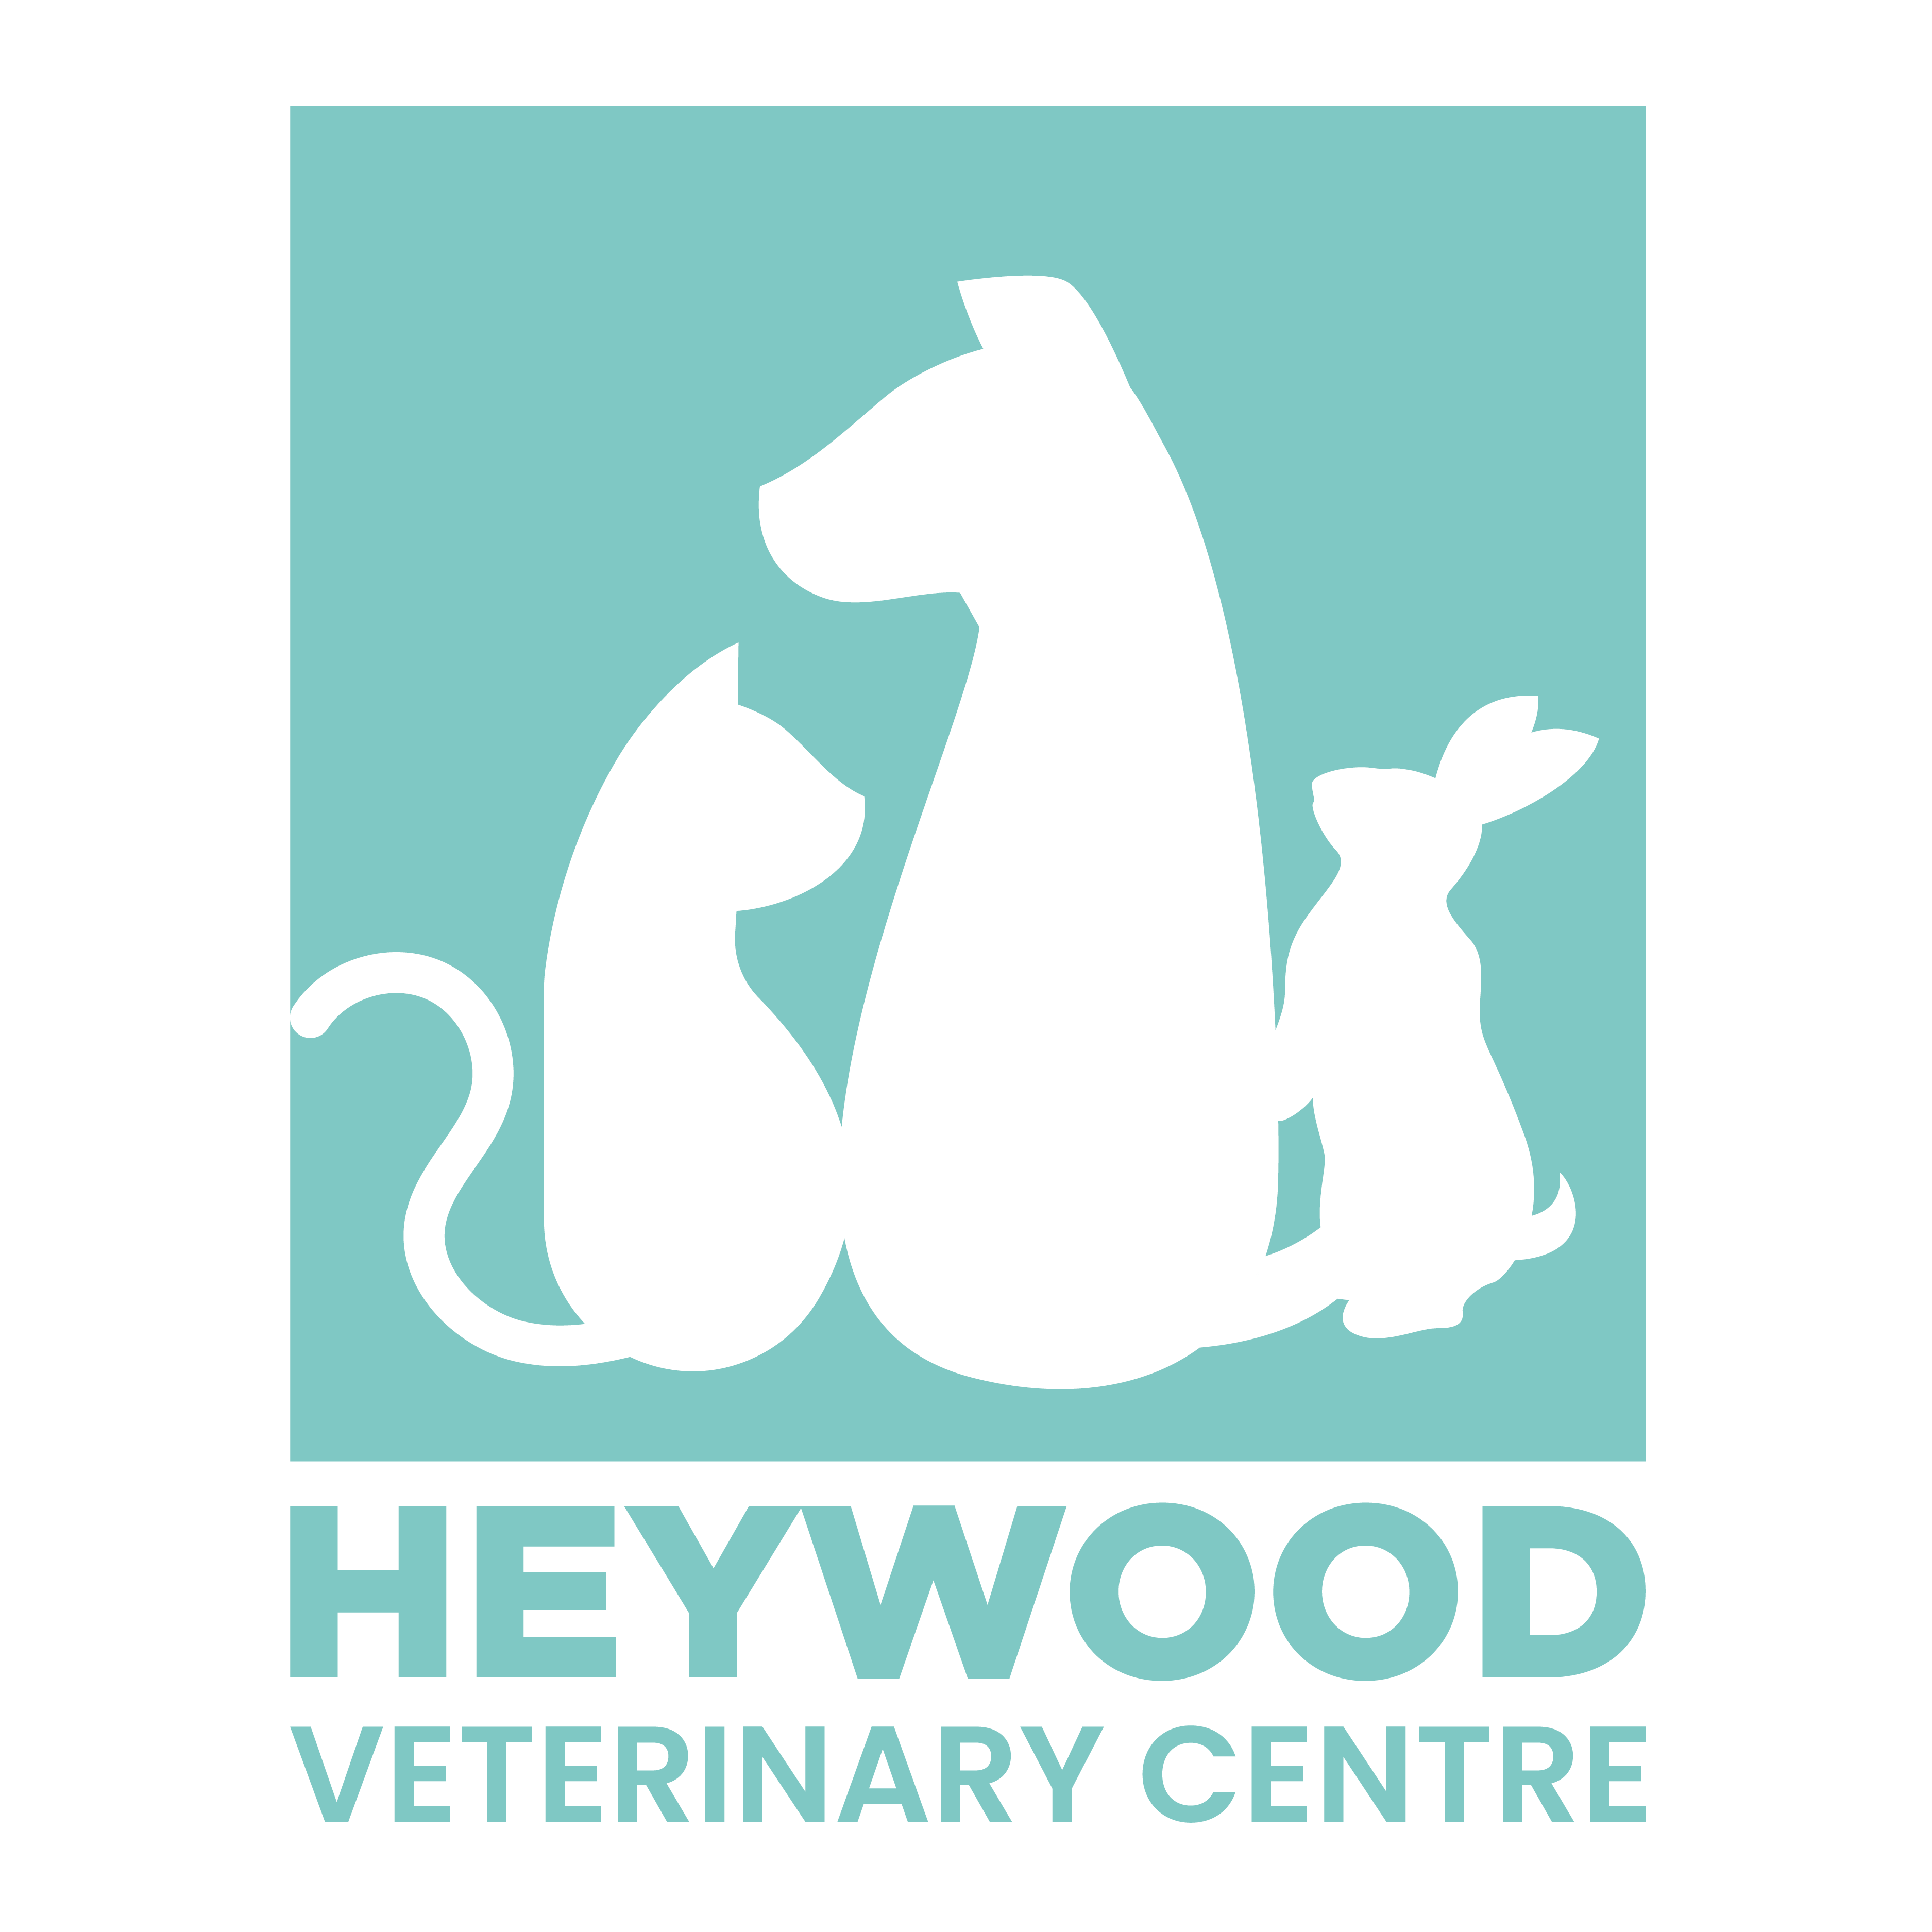 Heywood Veterinary Centre Heywood 01706 369171